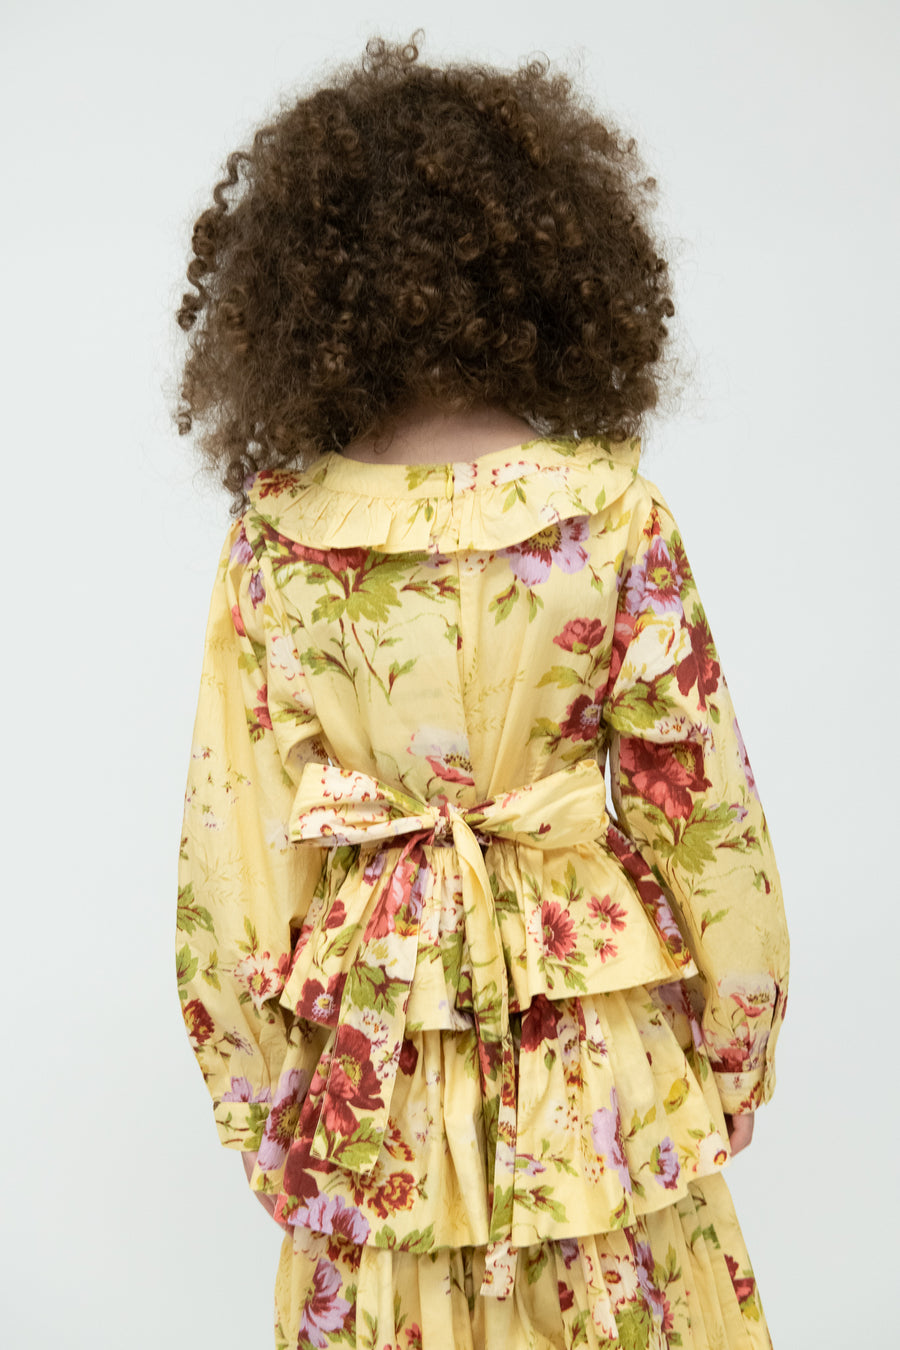 Laura Ashley x BATSHEVA Kid's Dress in Arundel - BATSHEVA